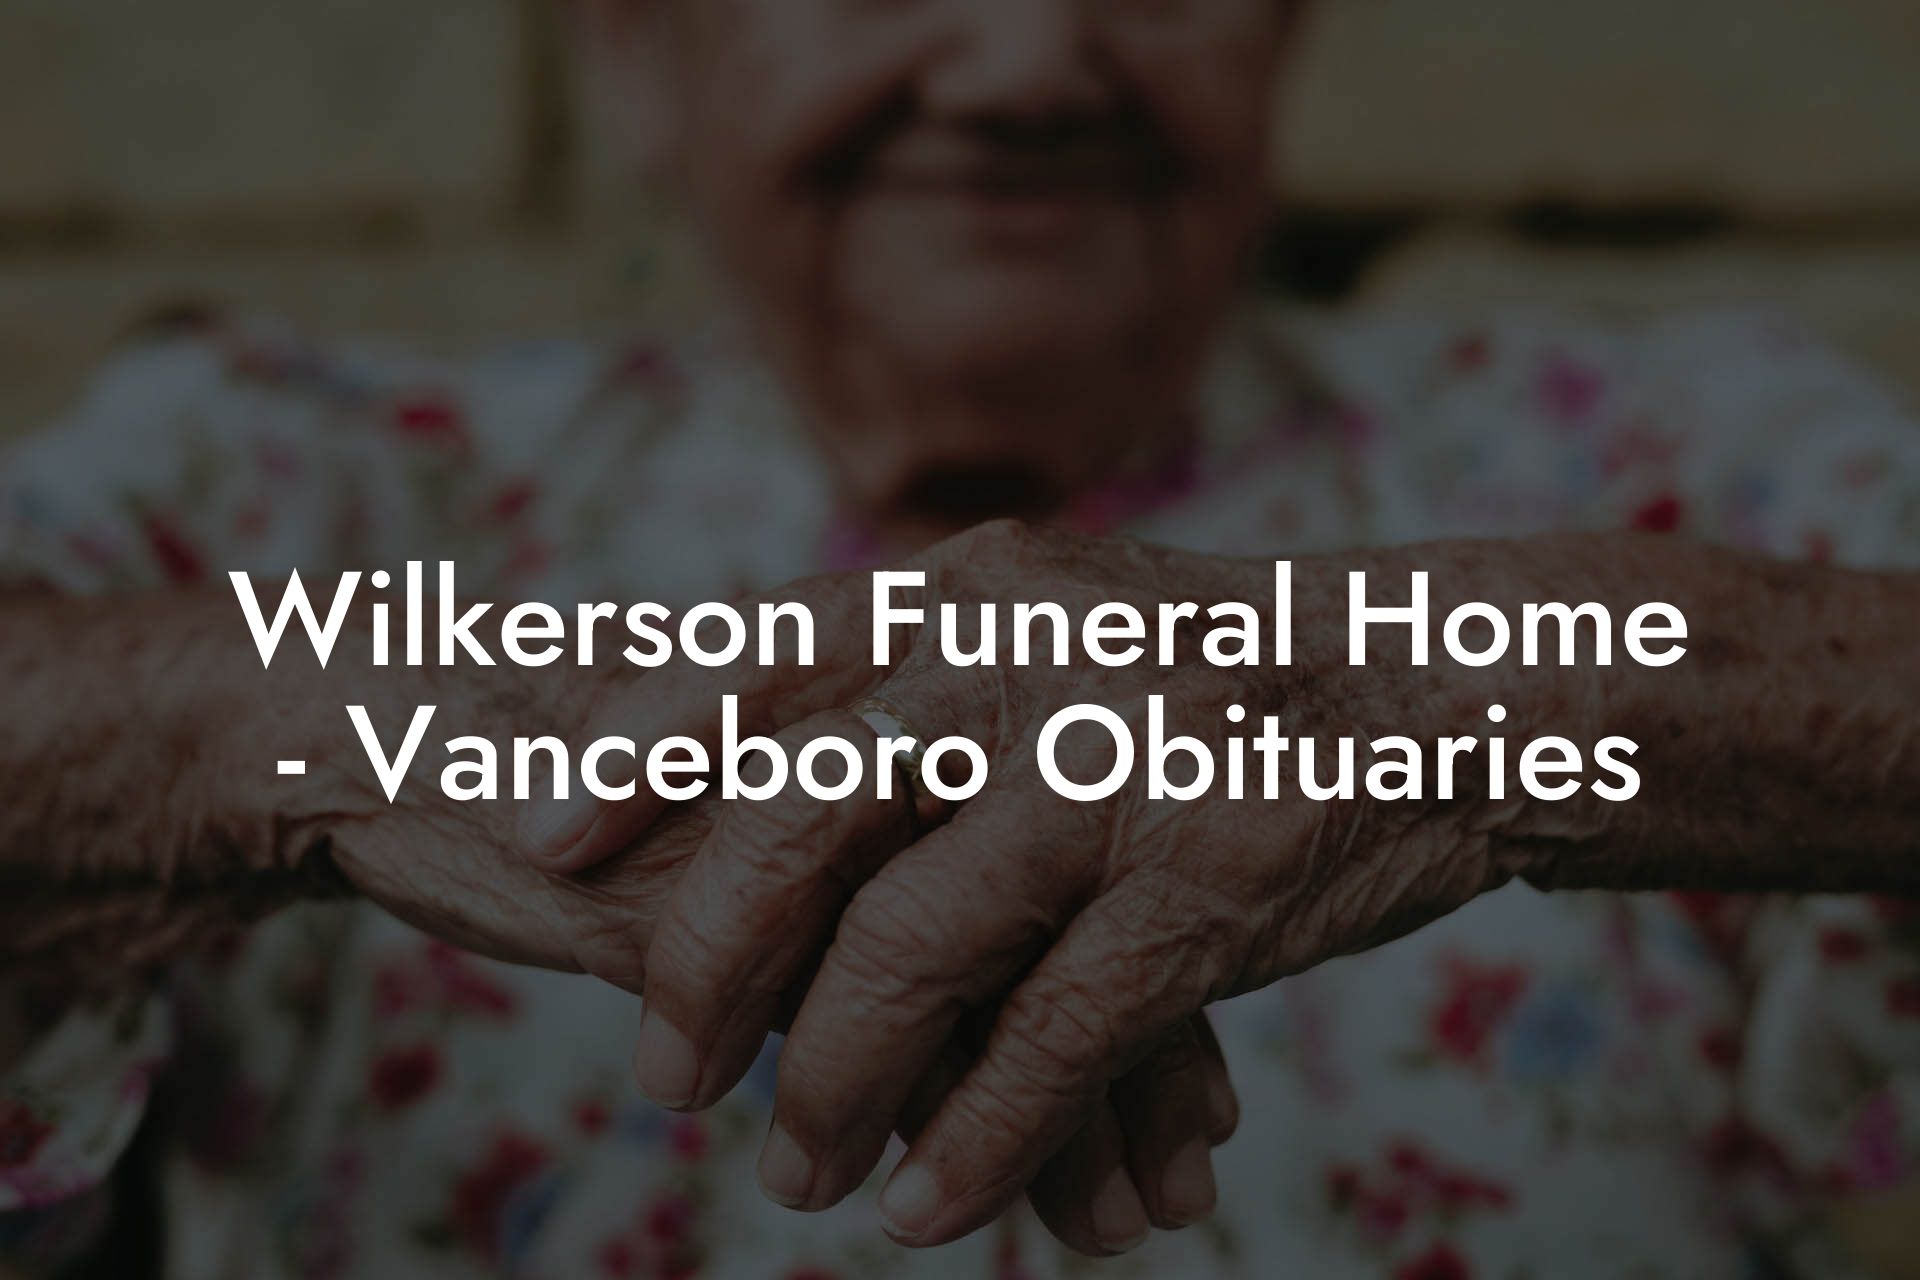 Wilkerson Funeral Home - Vanceboro Obituaries